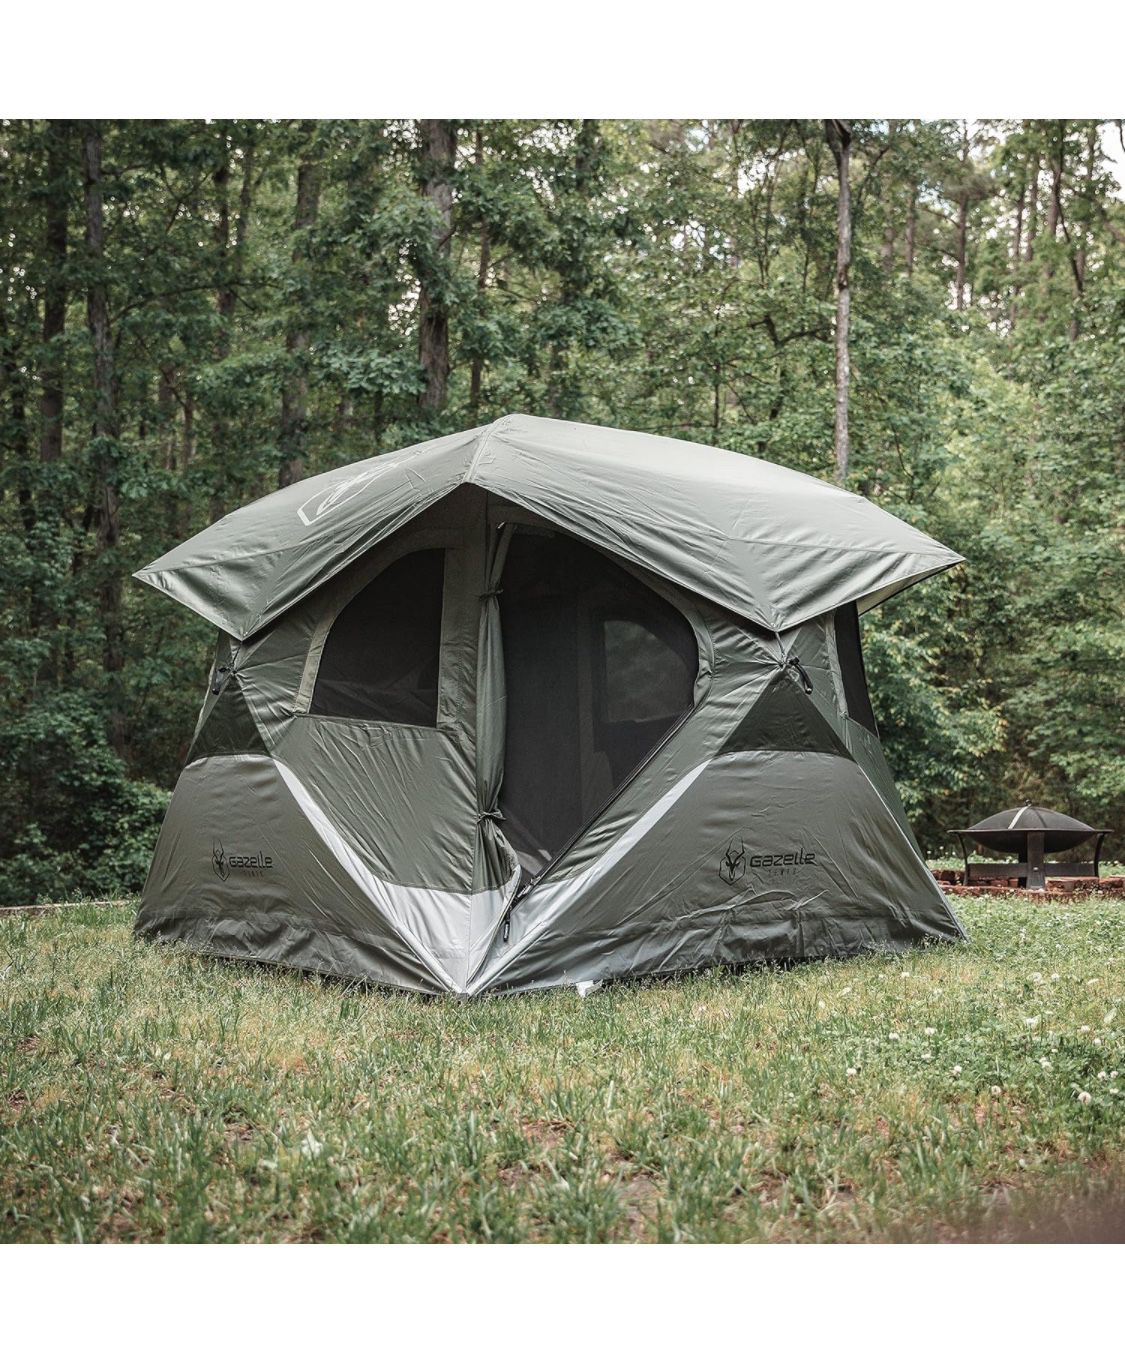 Gazelle T4 Hub Tent-Used 1X-Like New. 